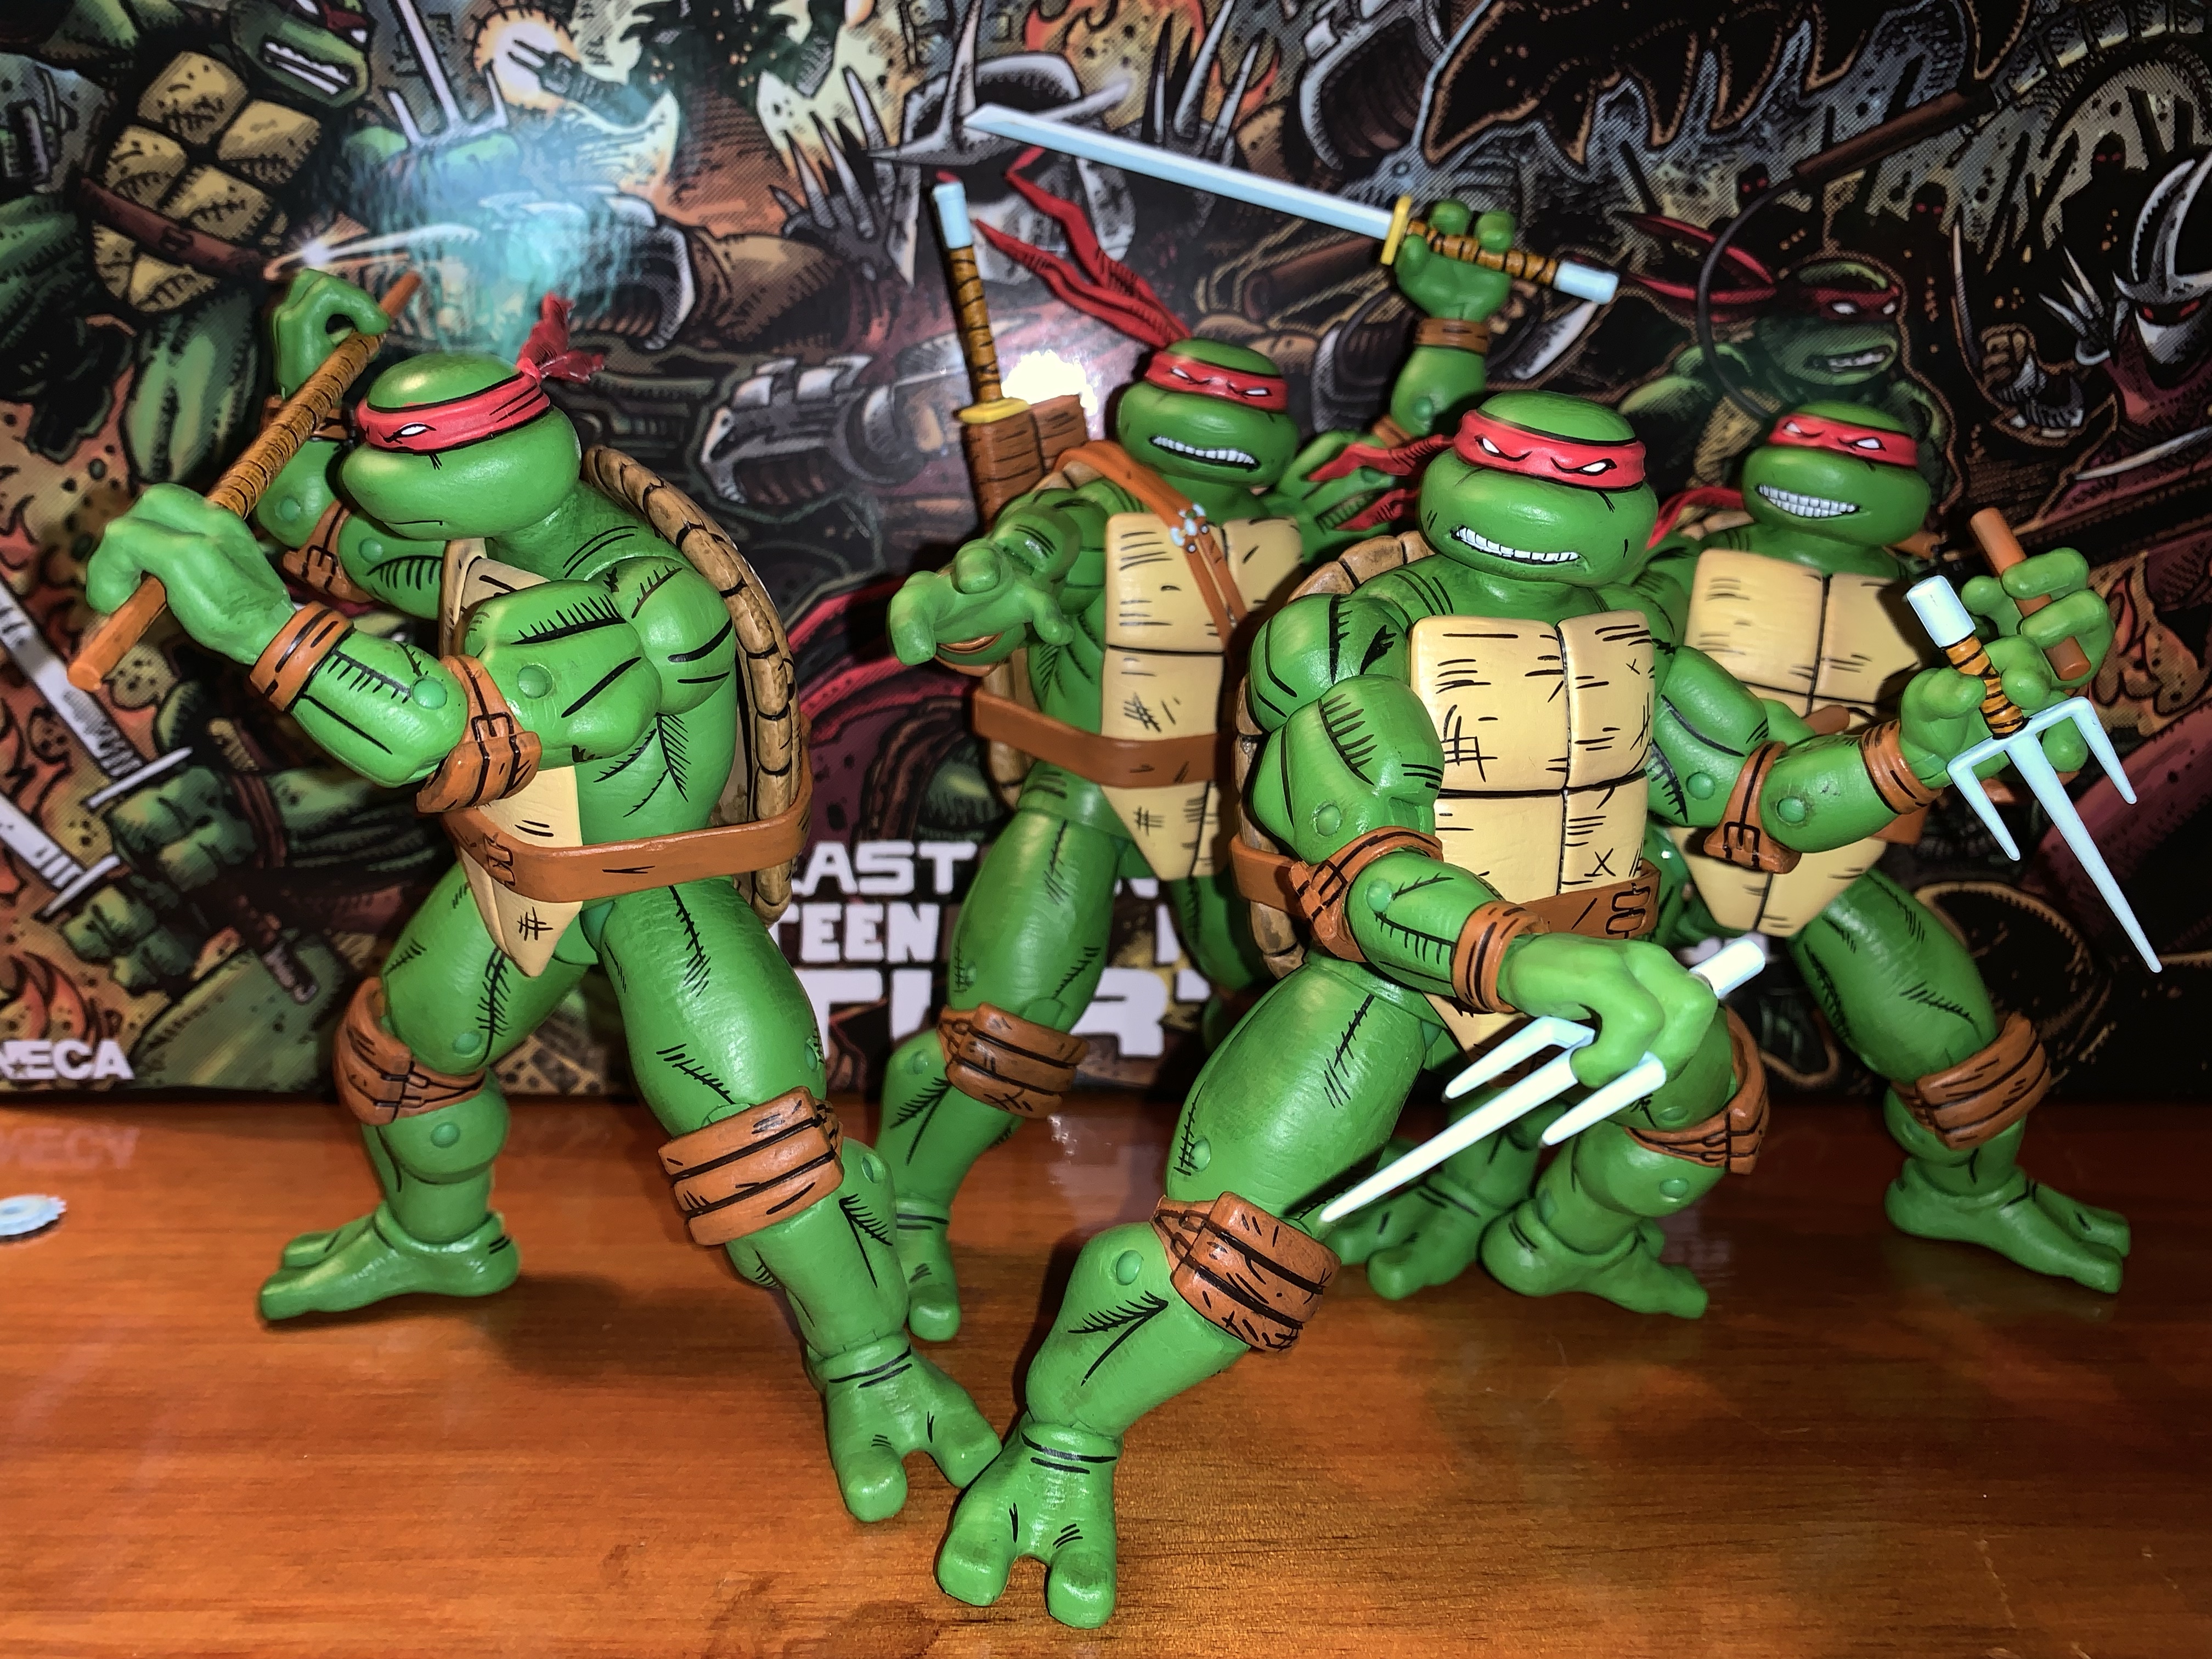 Slideshow: Every Teenage Mutant Ninja Turtle Movie, TV Series and Game